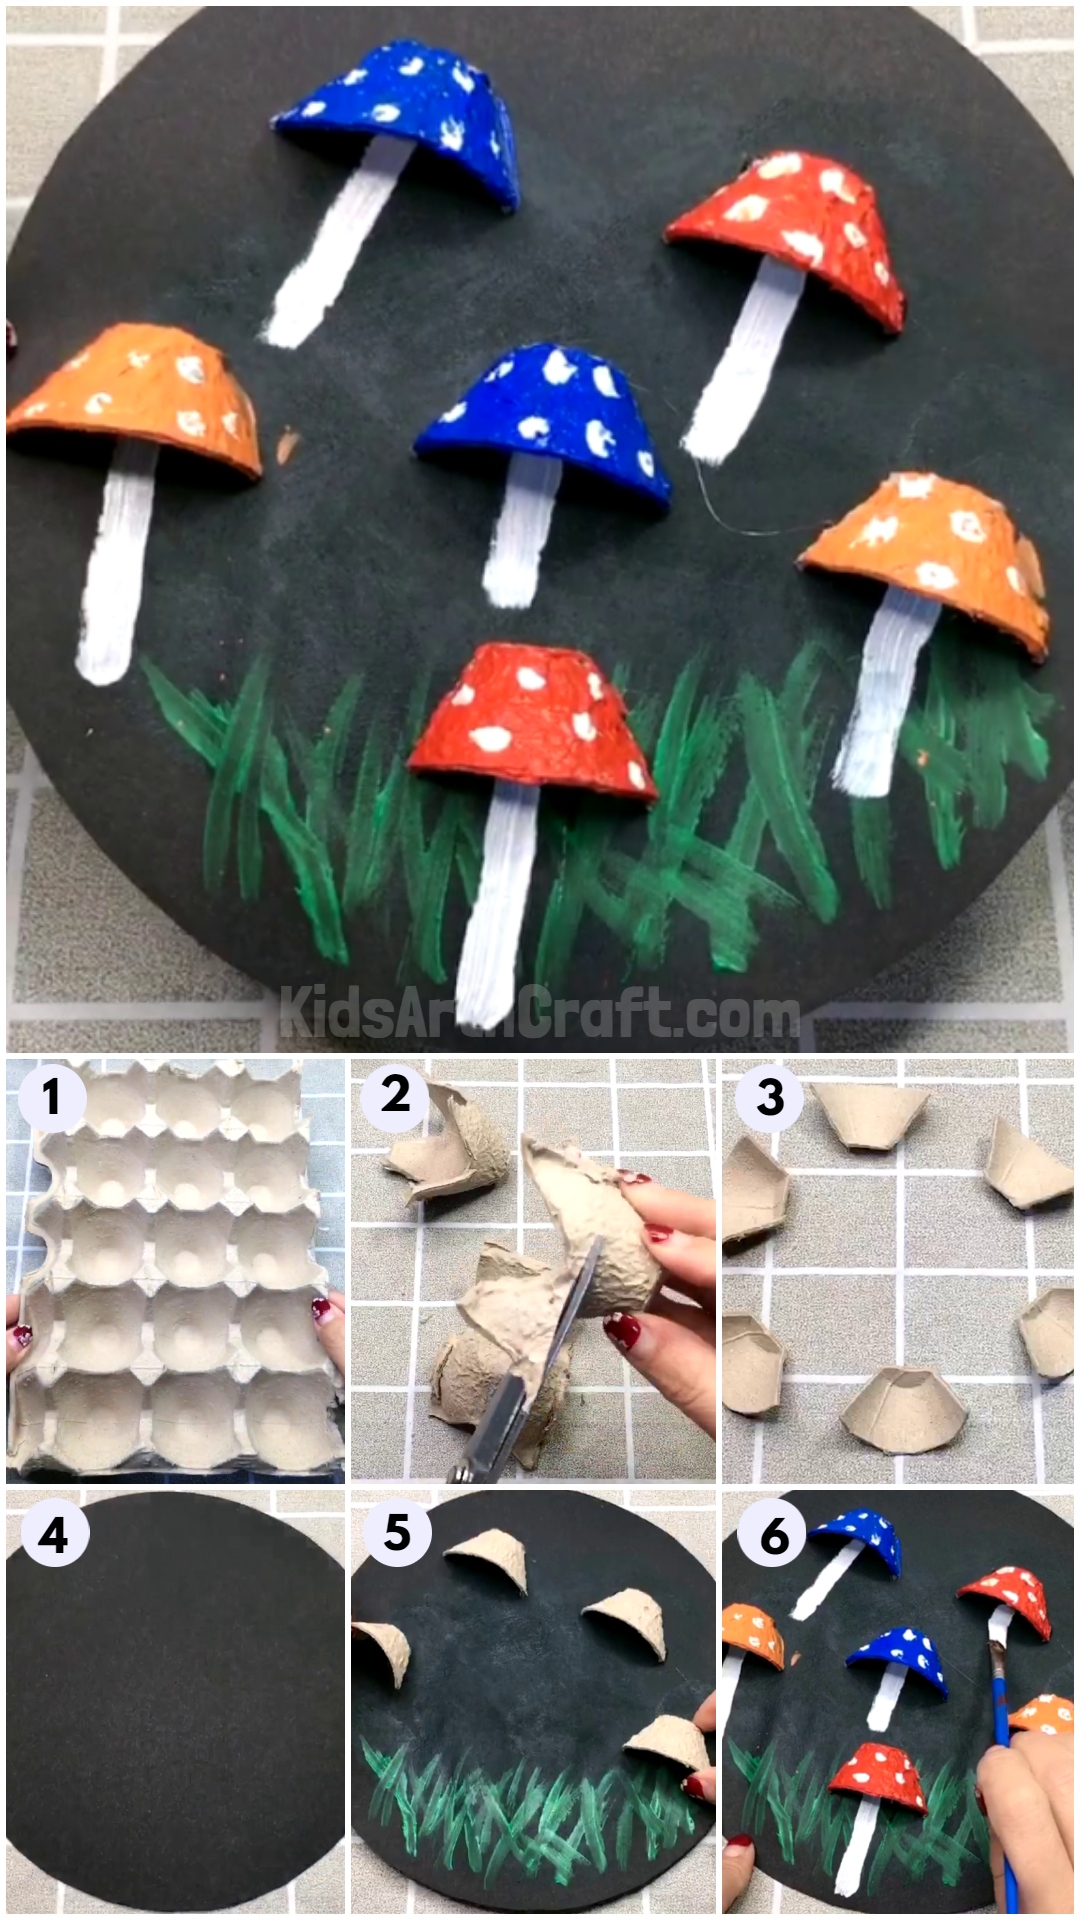 How To Make A Mushroom Out Of Egg Carton